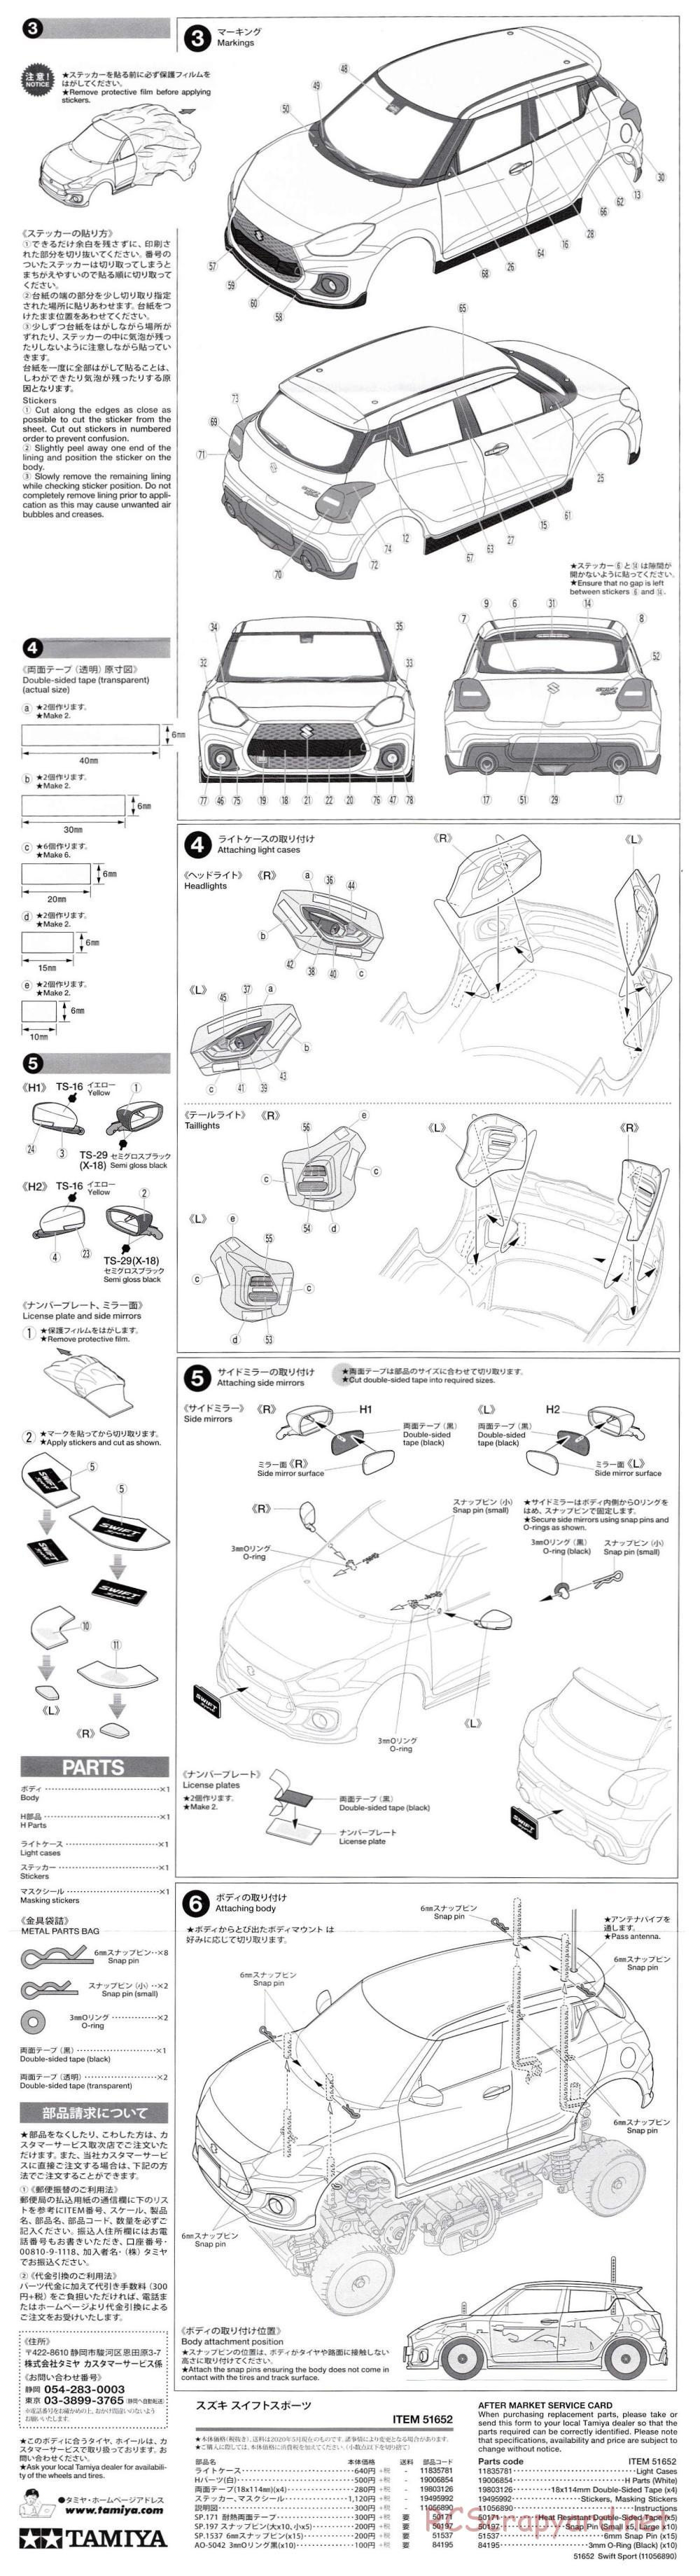 Tamiya - Suzuki Swift Sport - M-05 Chassis - Body Manual - Page 2